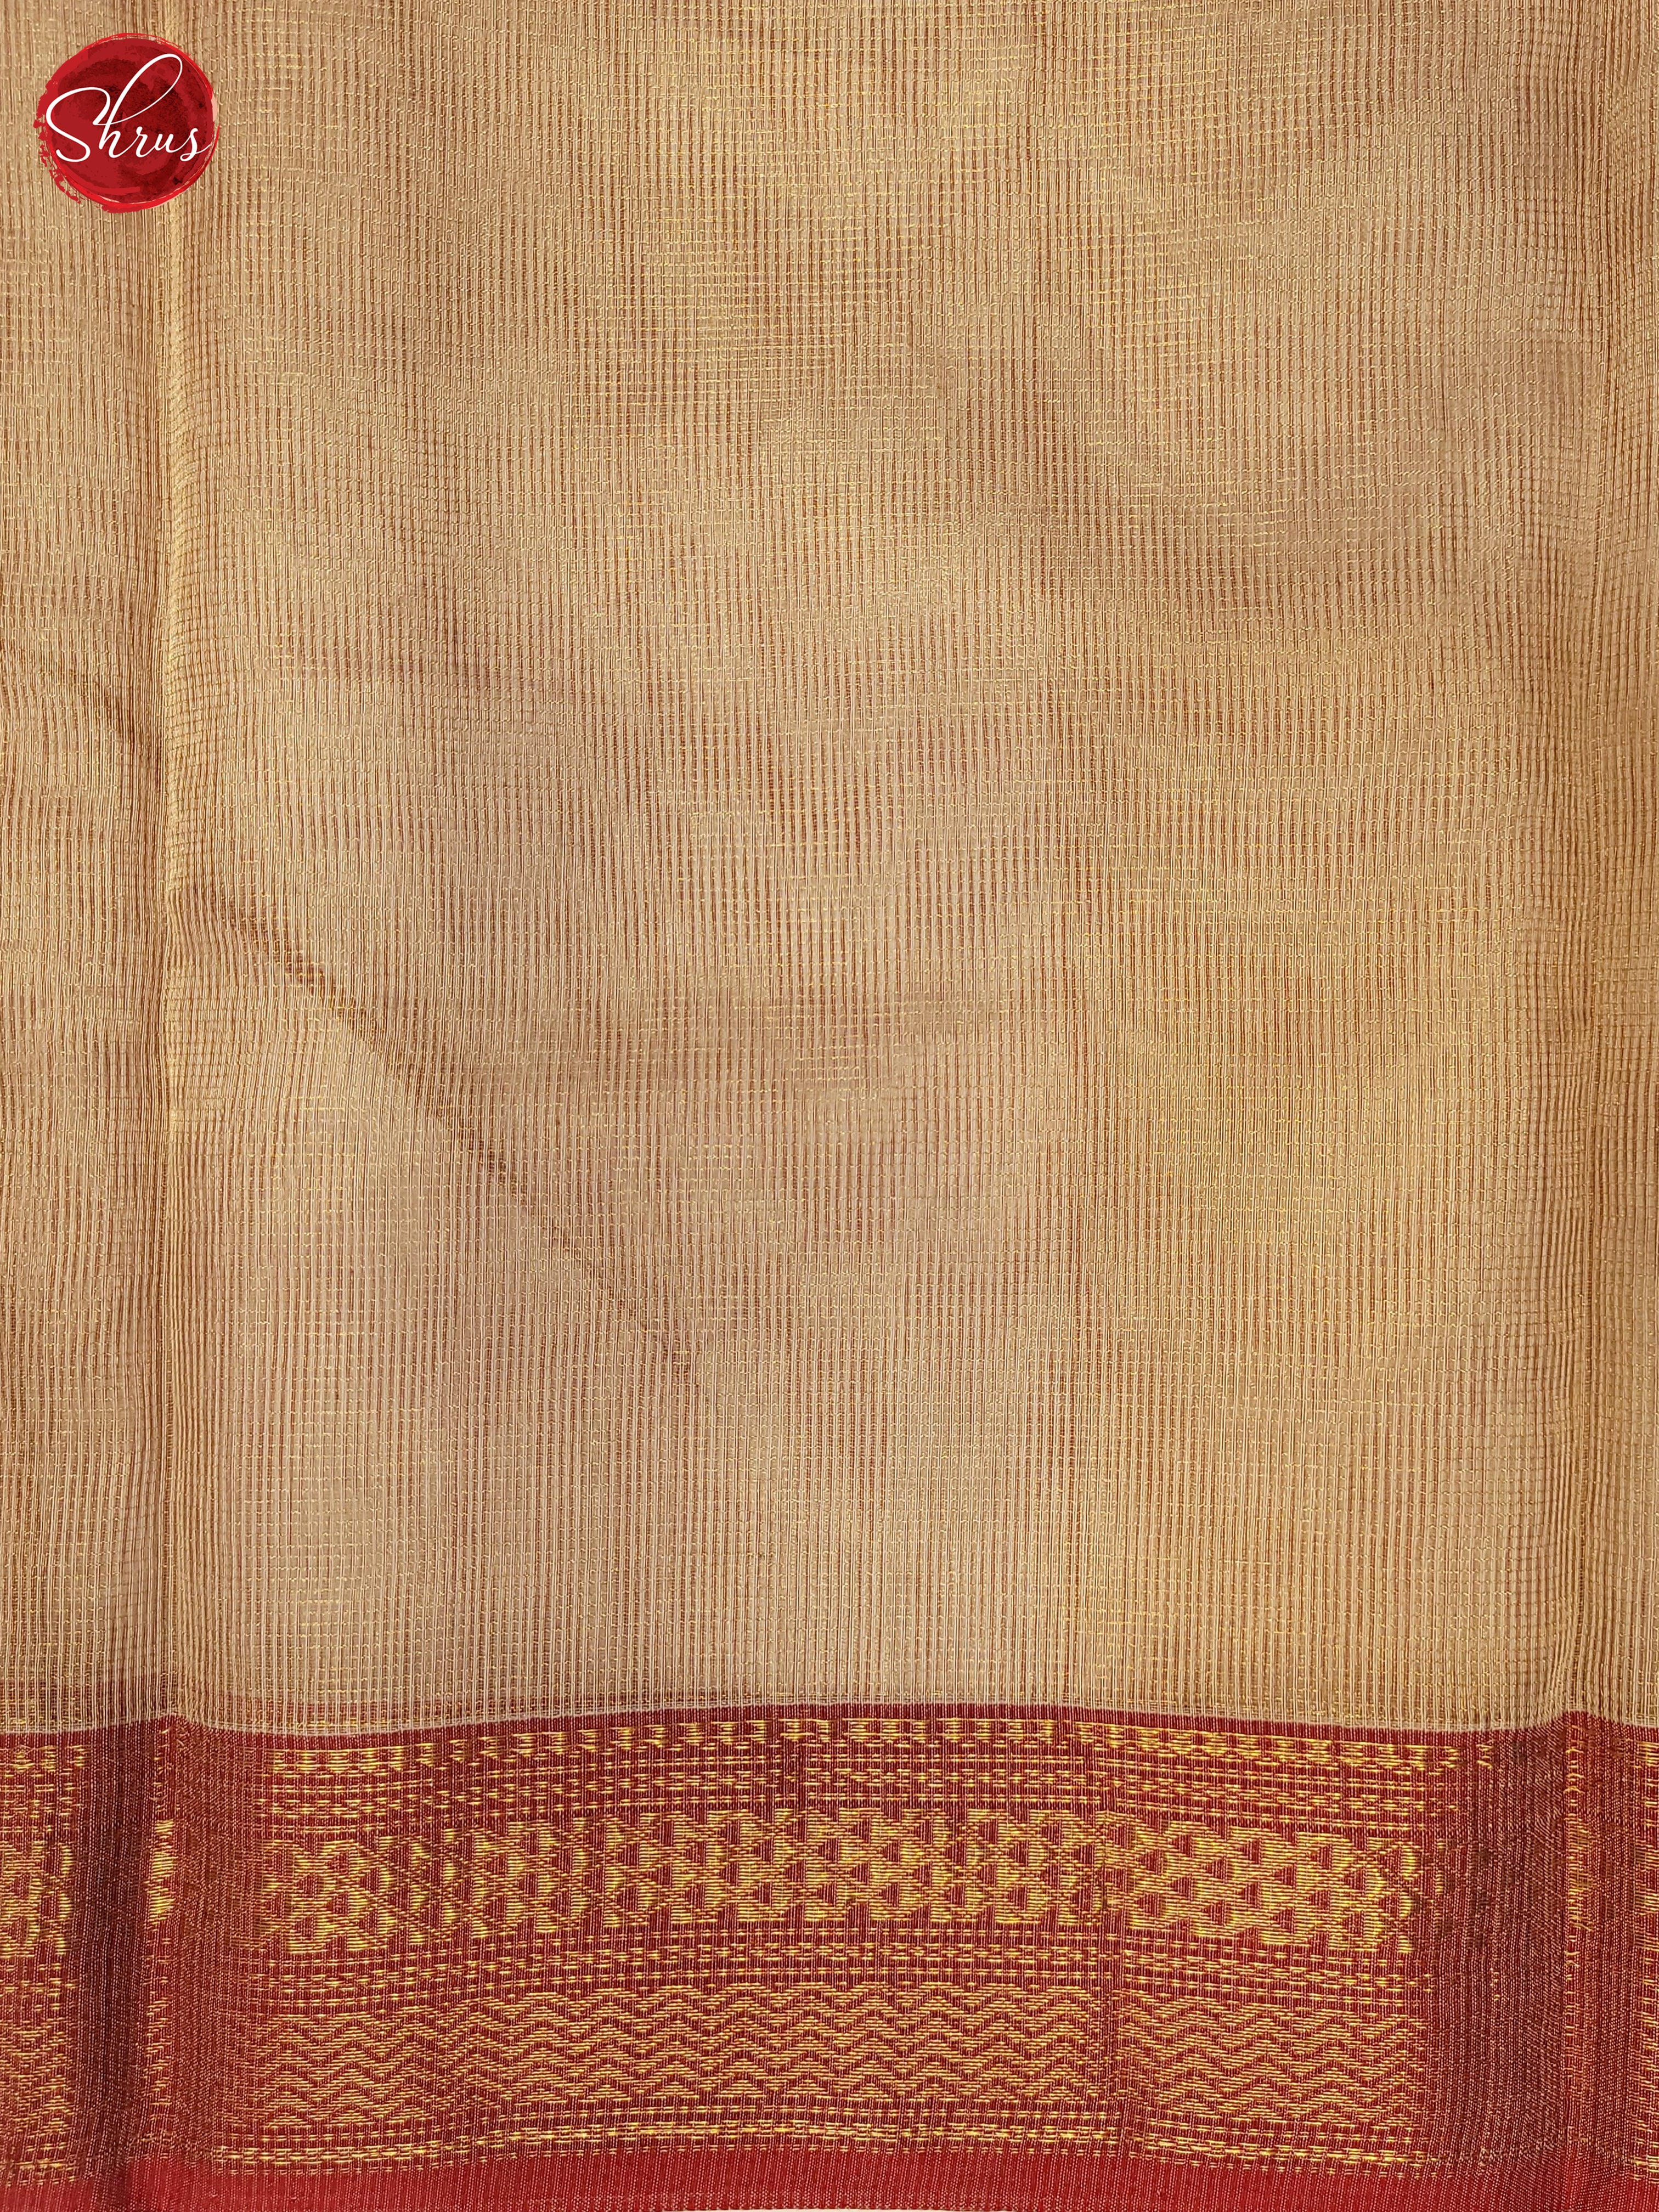 Beige & Red - Maheshwari silkcotton Saree - Shop on ShrusEternity.com